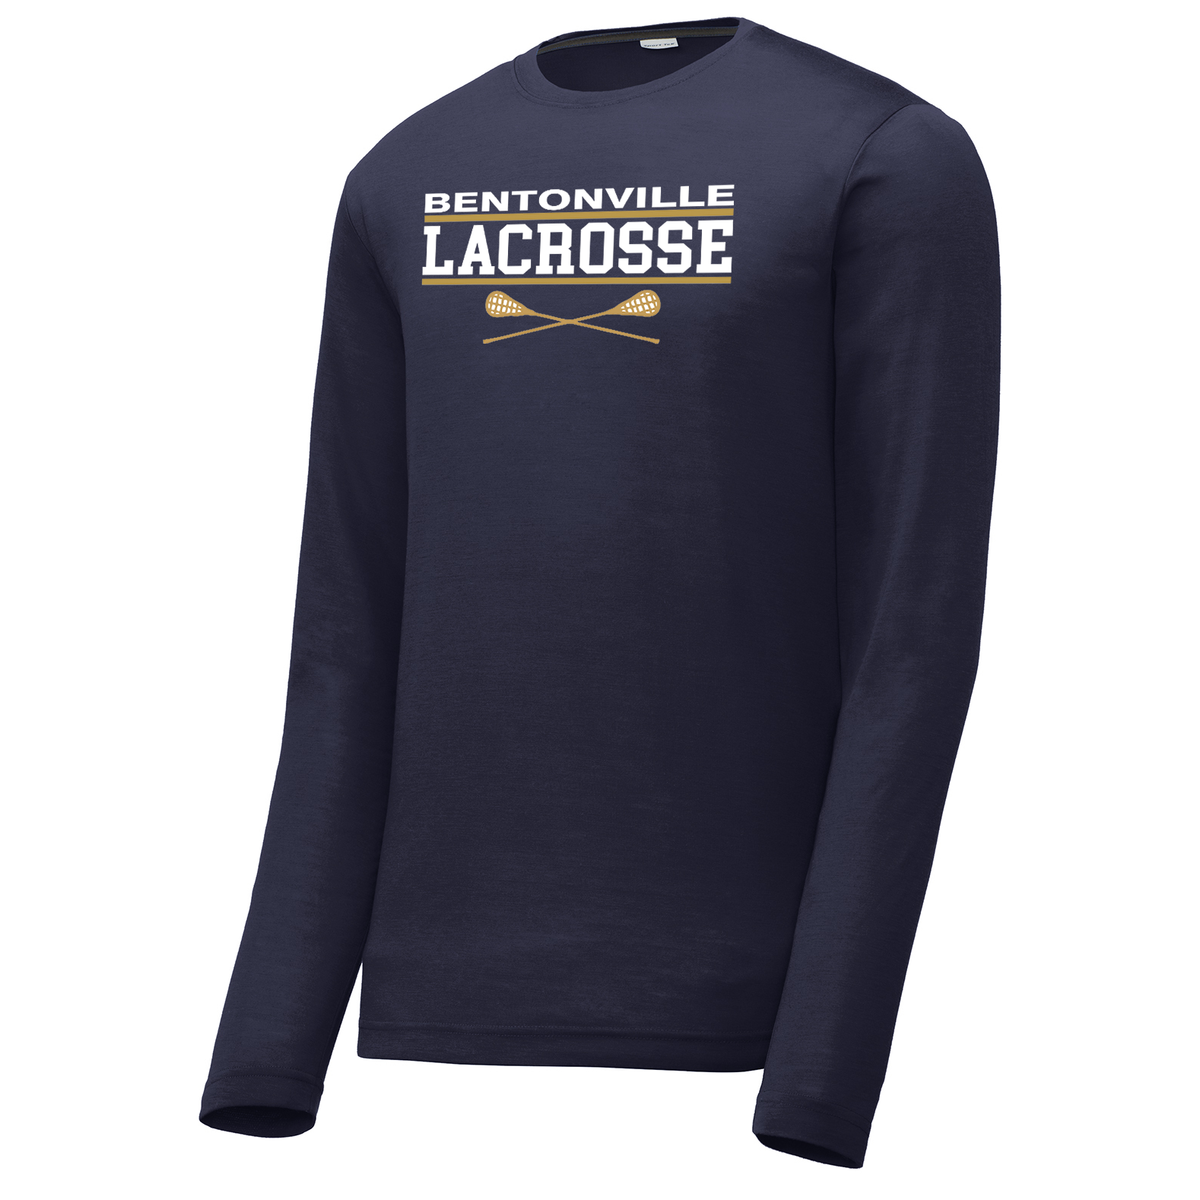 Bentonville Lacrosse Long Sleeve CottonTouch Performance Shirt